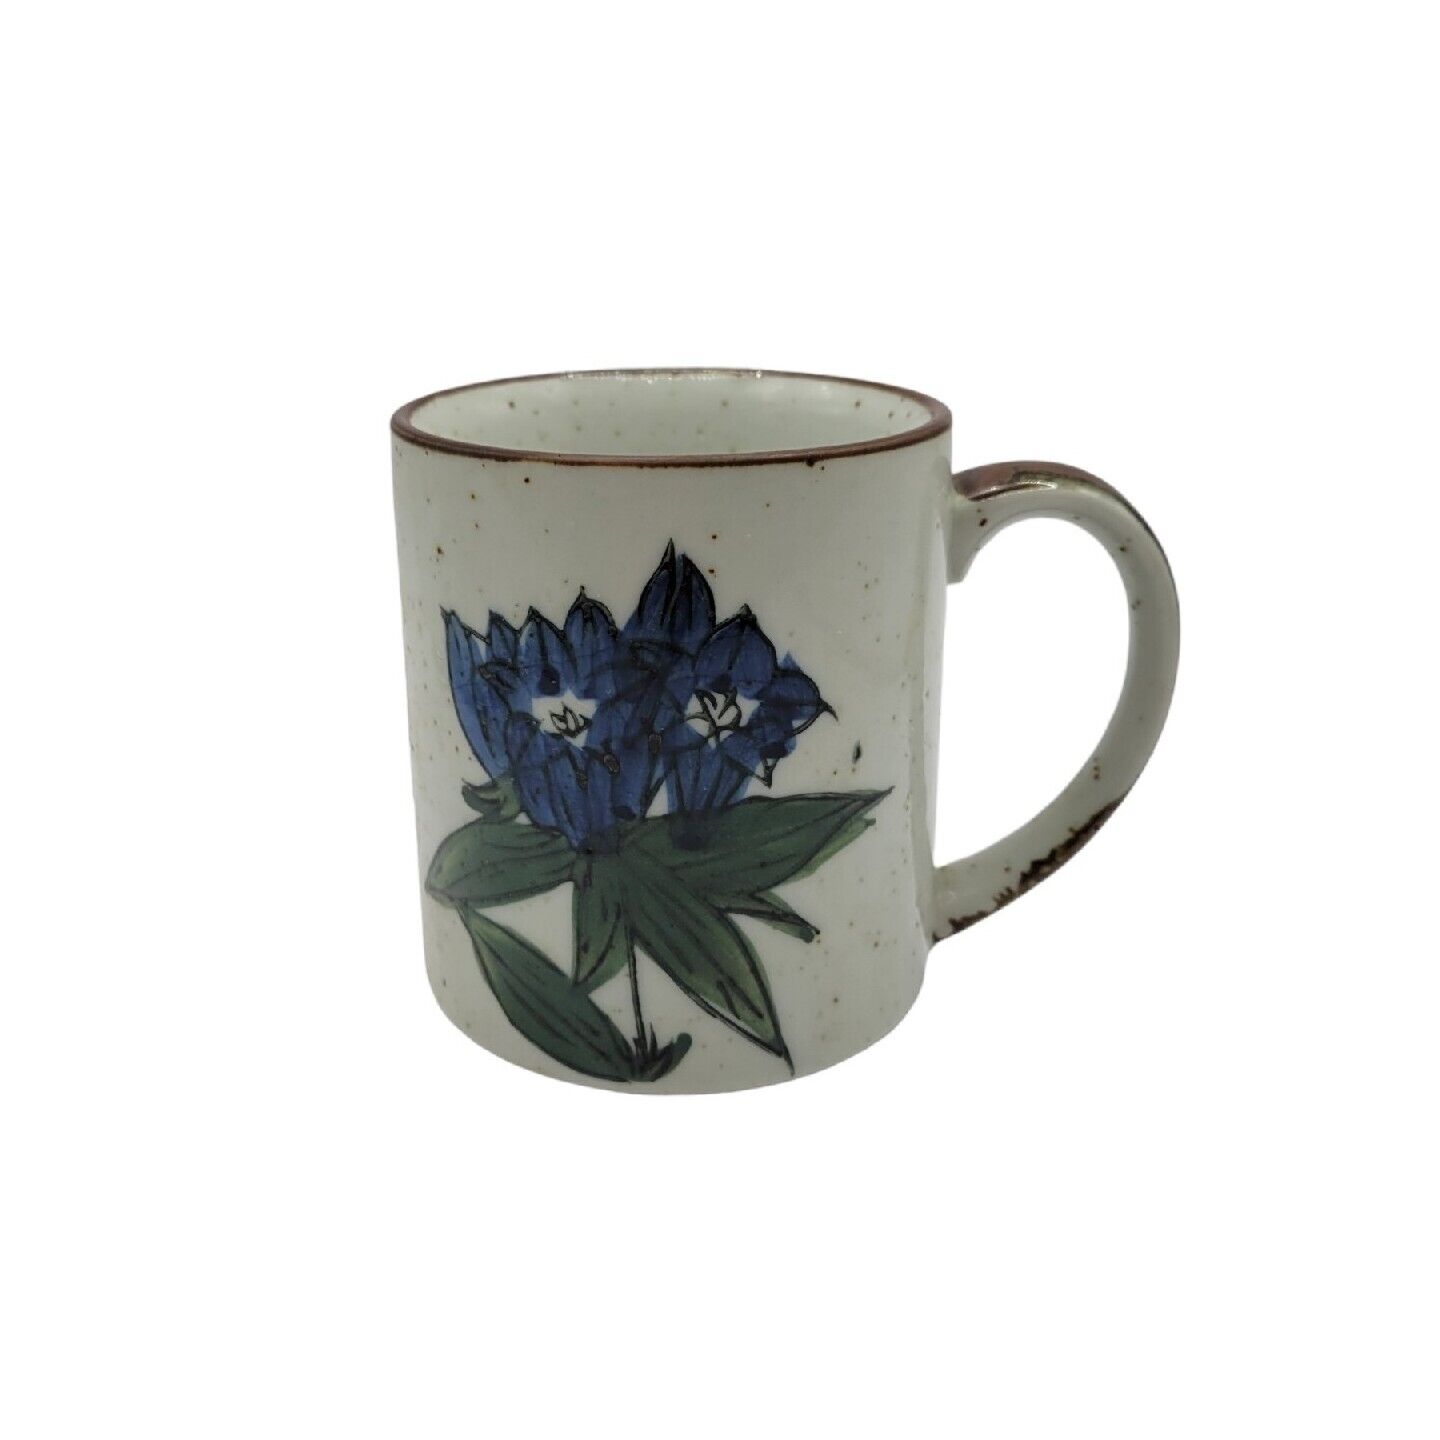 Vtg Speckled Stoneware Blue Bachelors Buttons Floral Ceramic Coffee Tea Mug